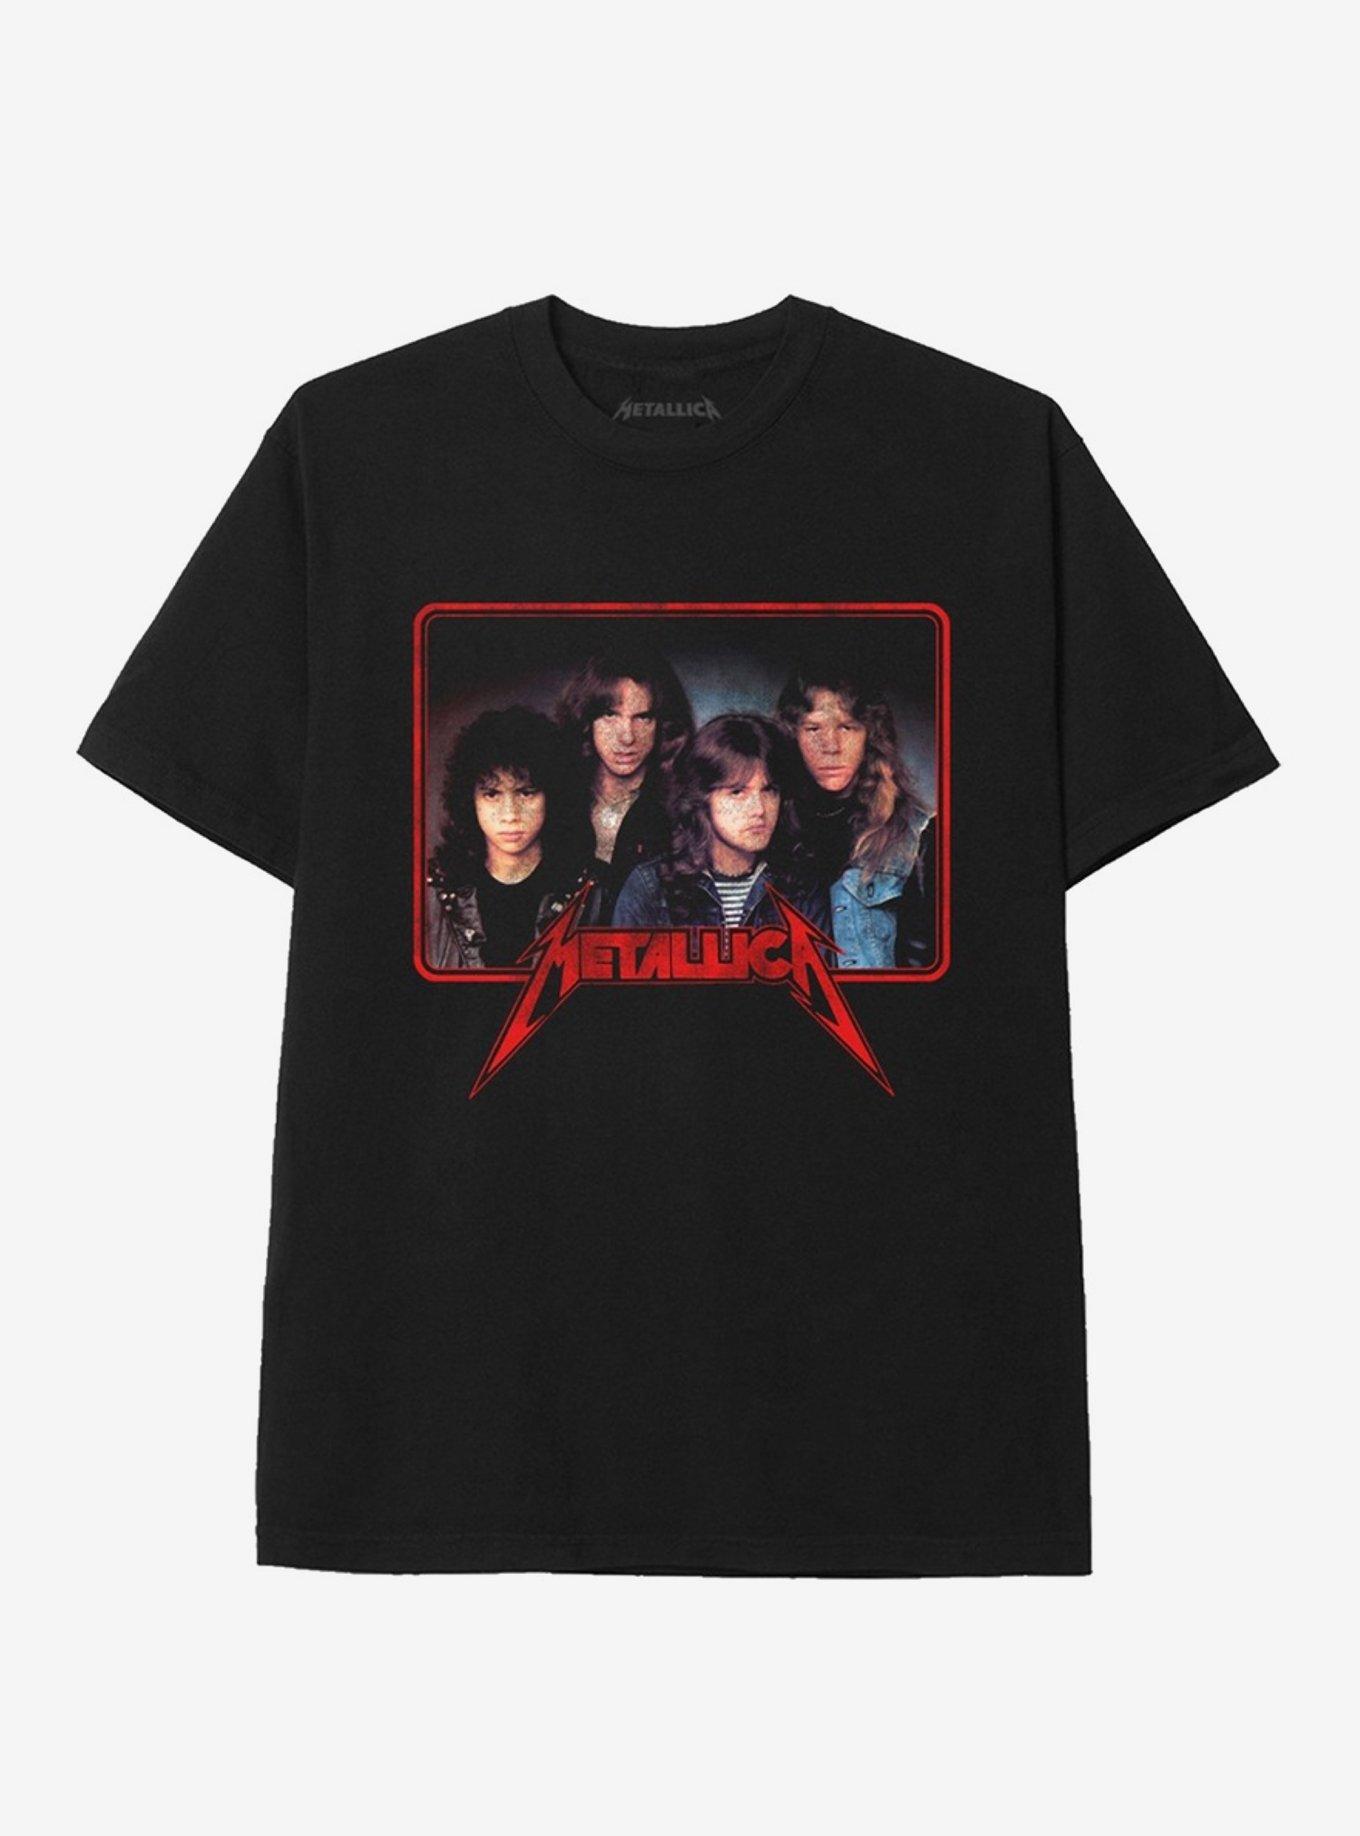 Hot Topic Metallica T-Shirts